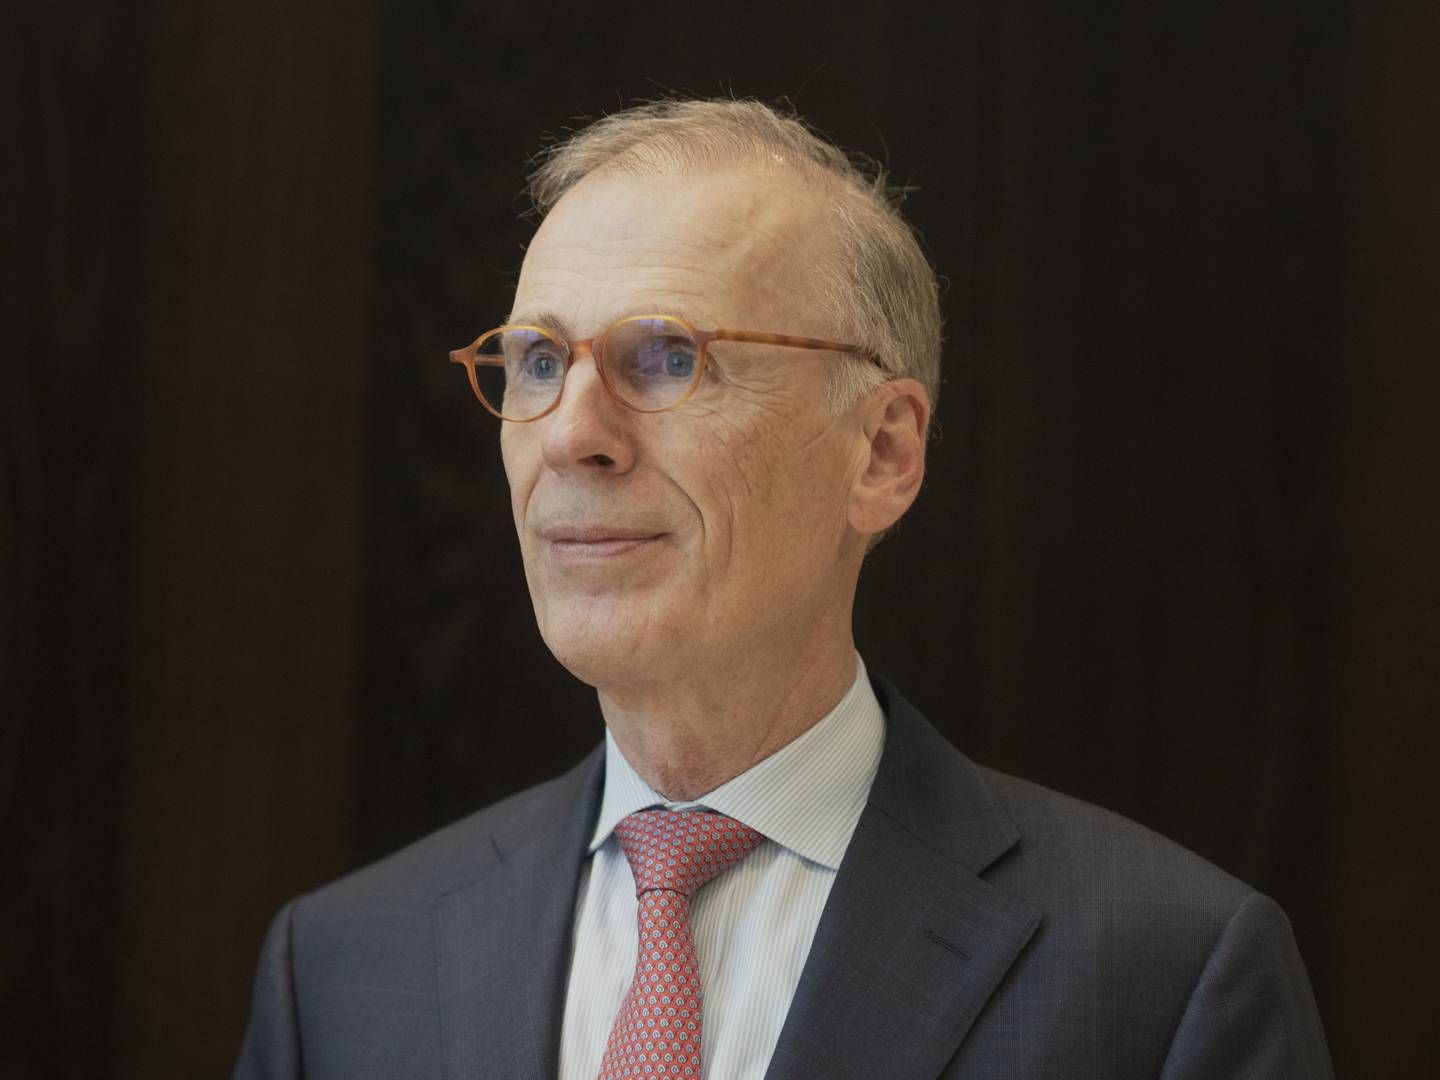 Adm. direktør i Carlsberg Cees 't Hart. | Foto: Liv Møller Kastrup/ERH